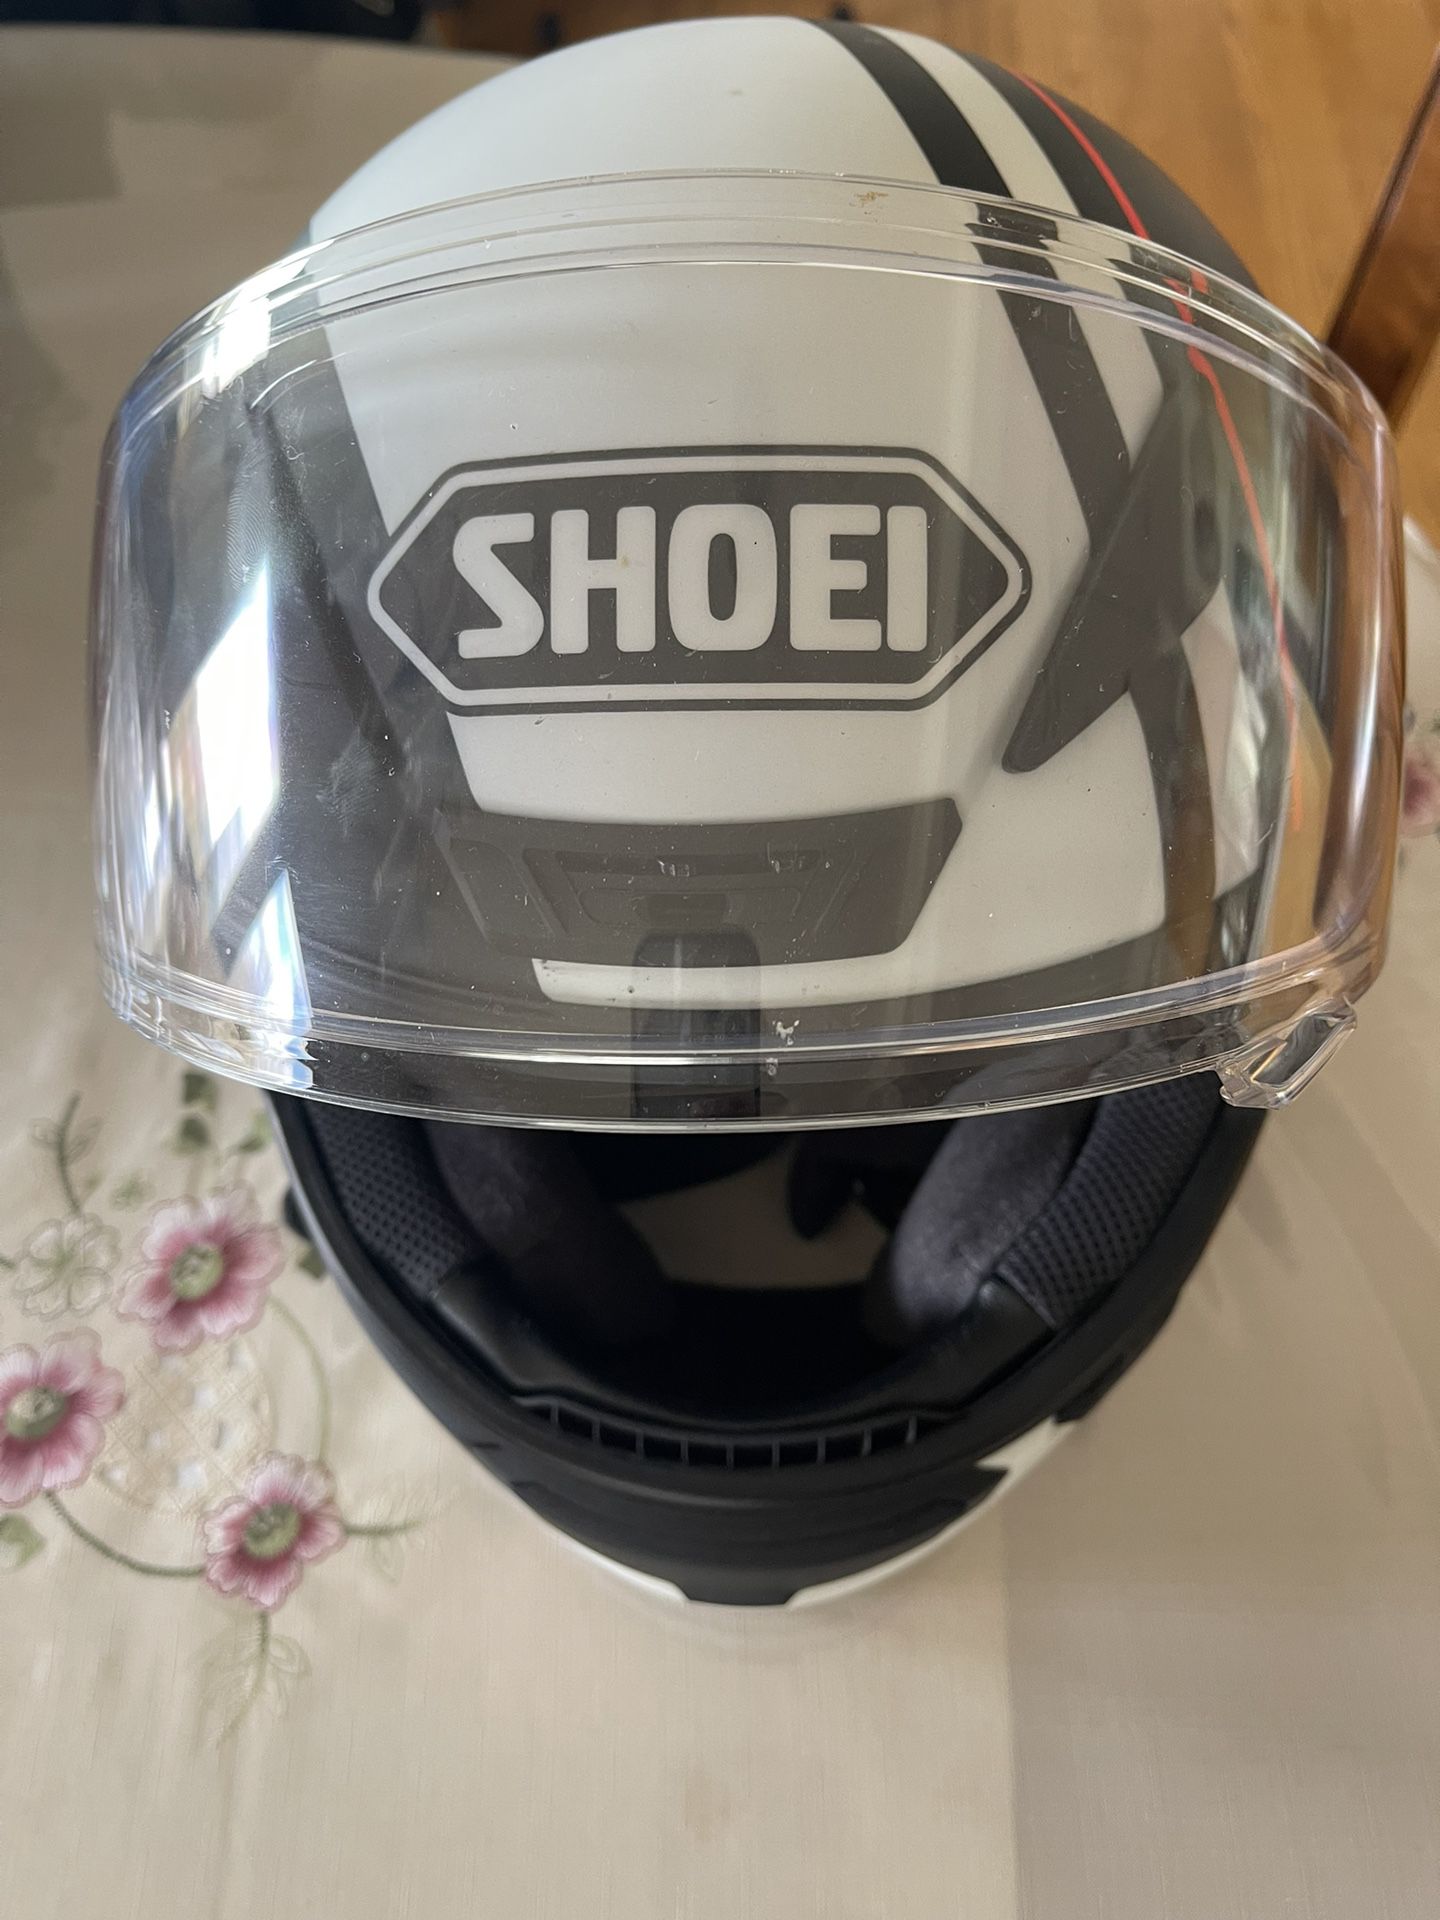 Shoei RF 1200 Motorcycle Helmet Size M